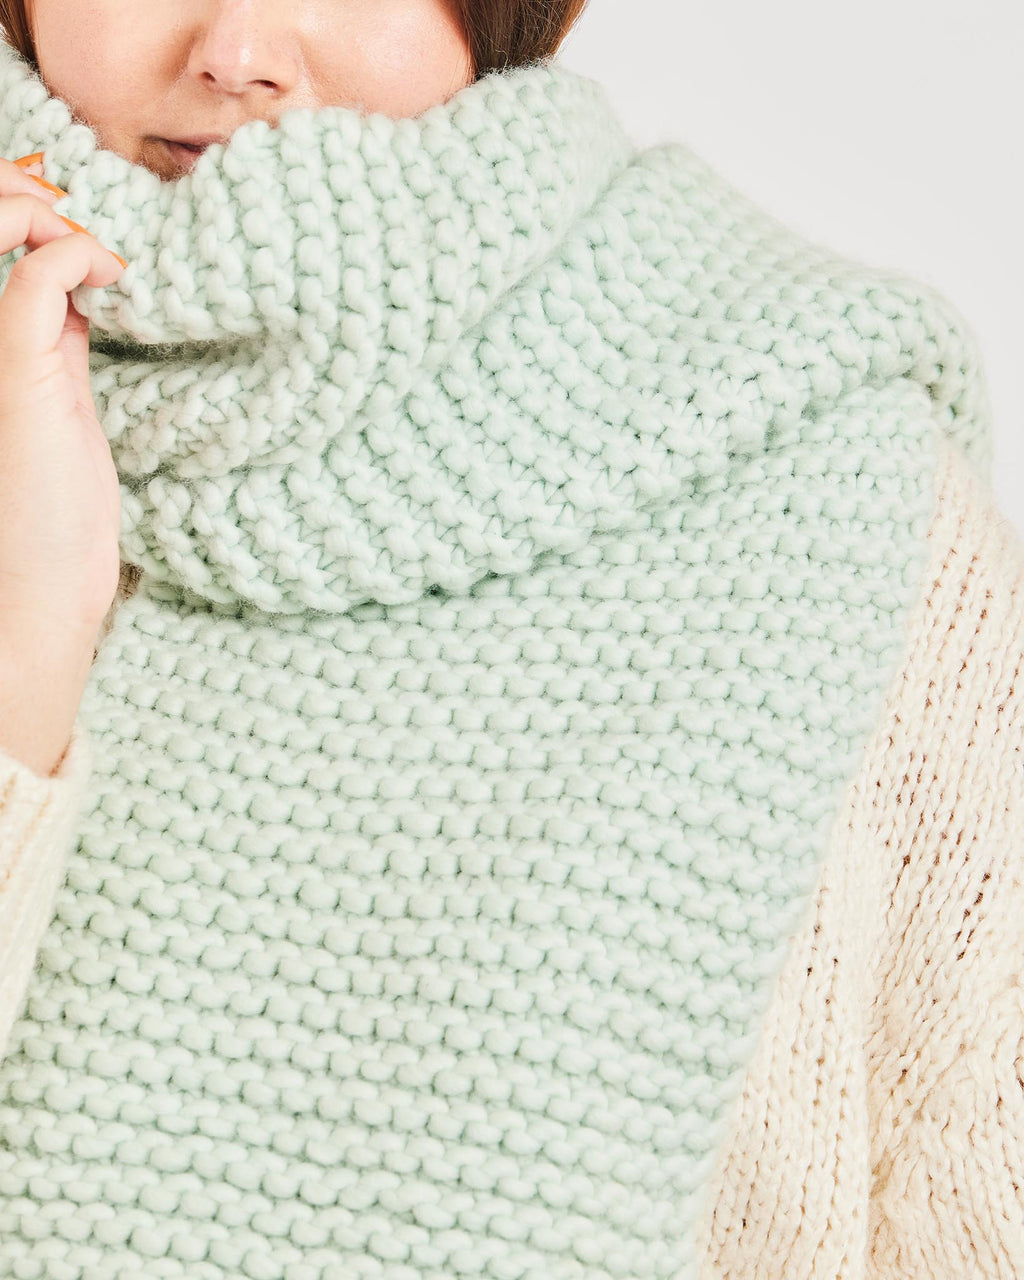 DIY Knitting Kits - Make Your Own Beginner Sets